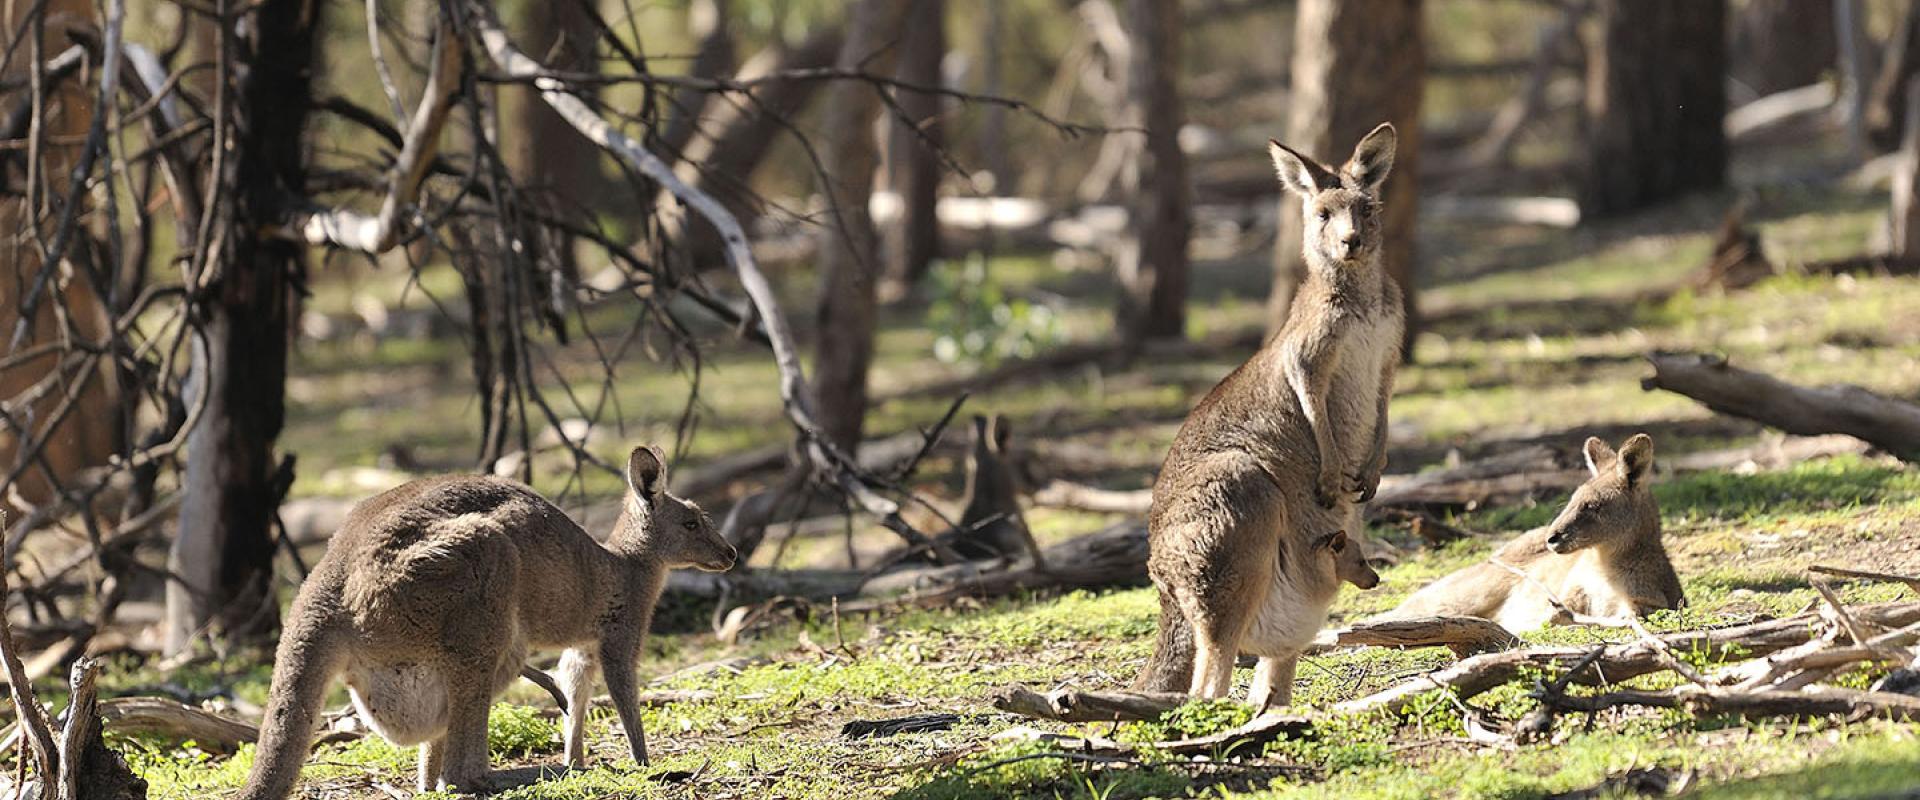 Kangaroos-and-joey-resting-in-australia-bushland